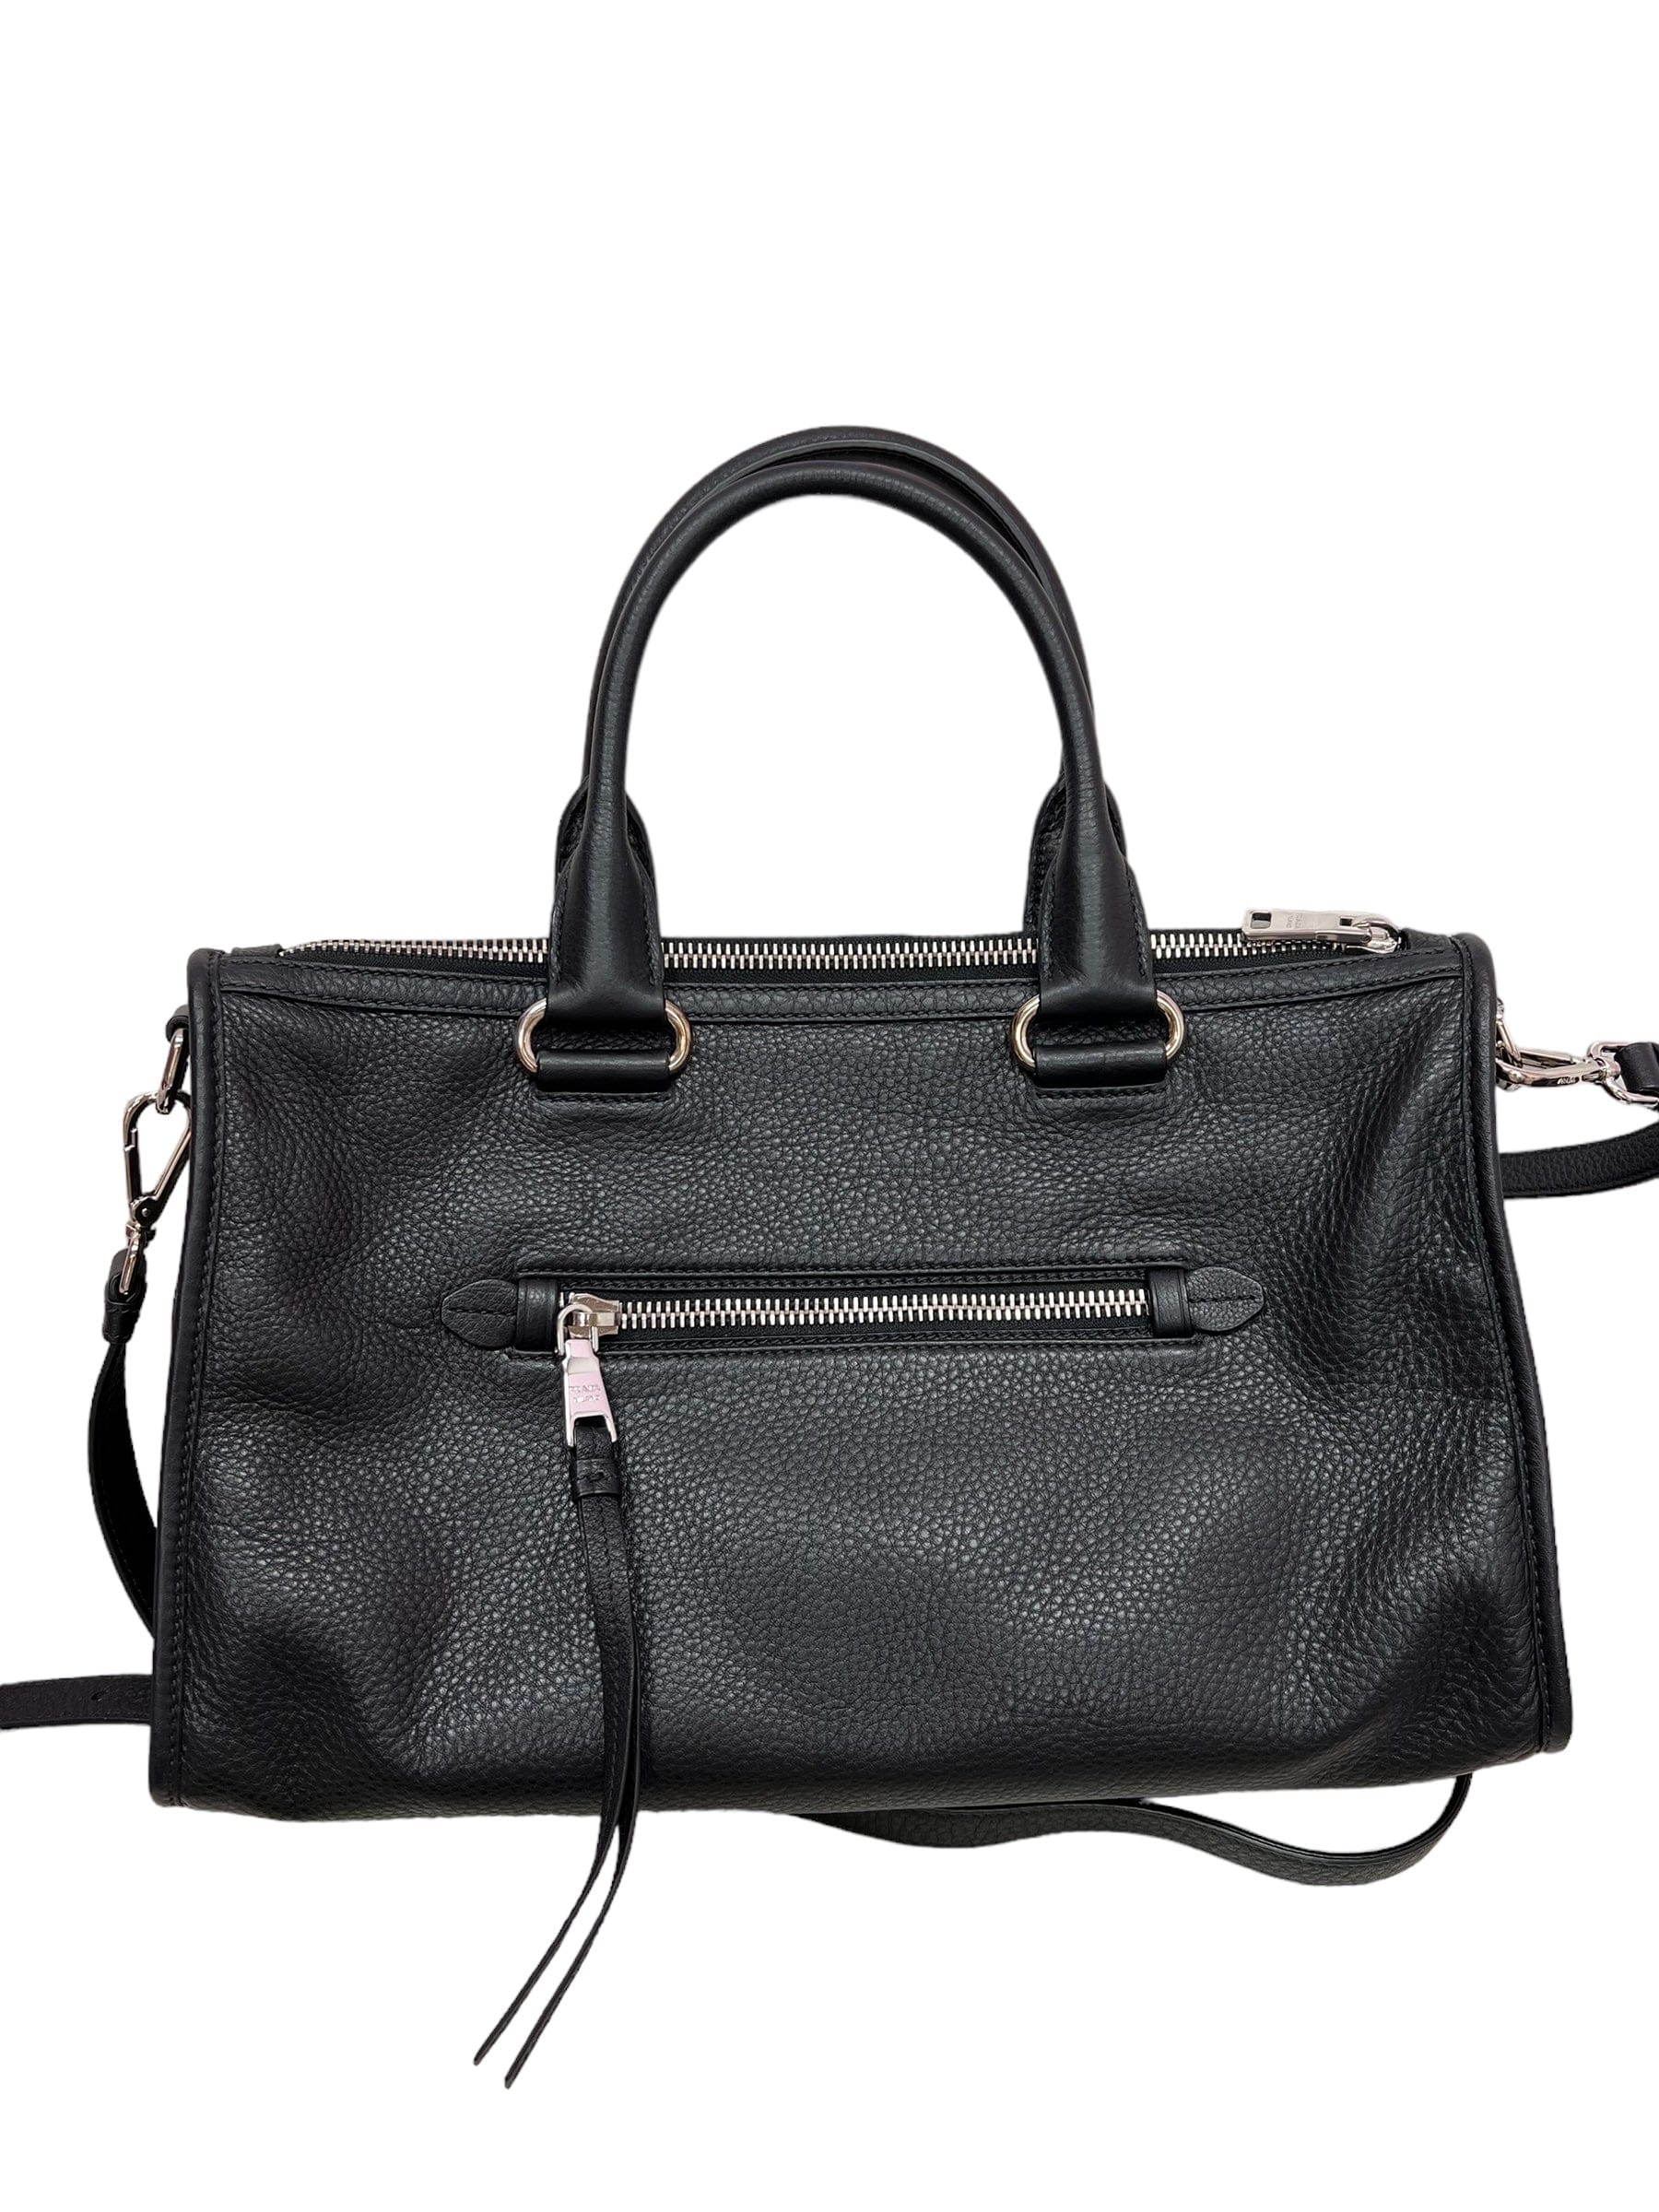 Prada Prada Black Leather Tote Bag SYCK1591